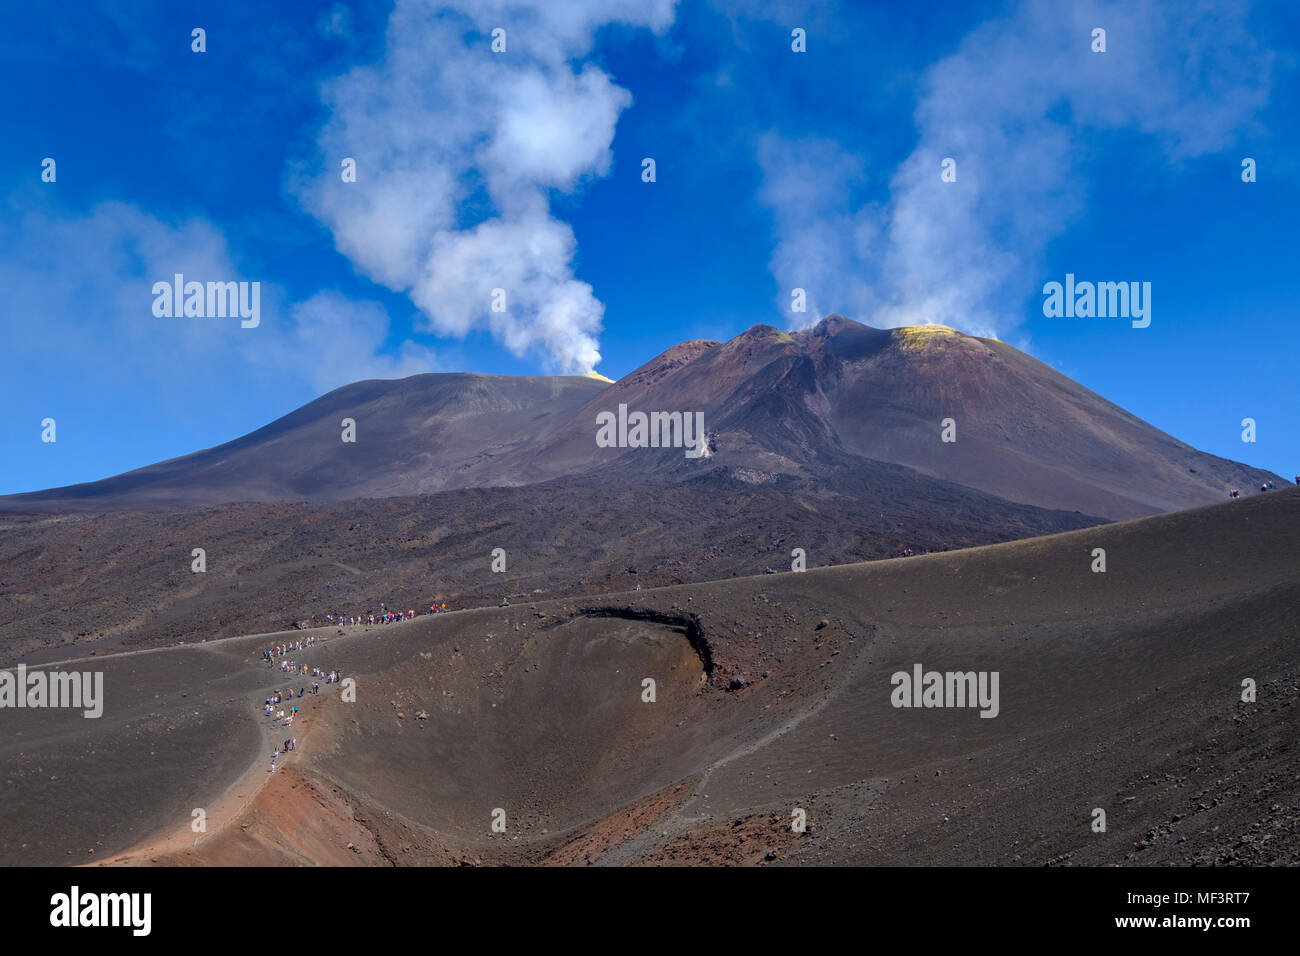 Soy Torre del Filosofo, rauchender Gipfel, Krater, Vulkan Ätna, Catania, Silzilien Provinz, Italien, Foto de stock